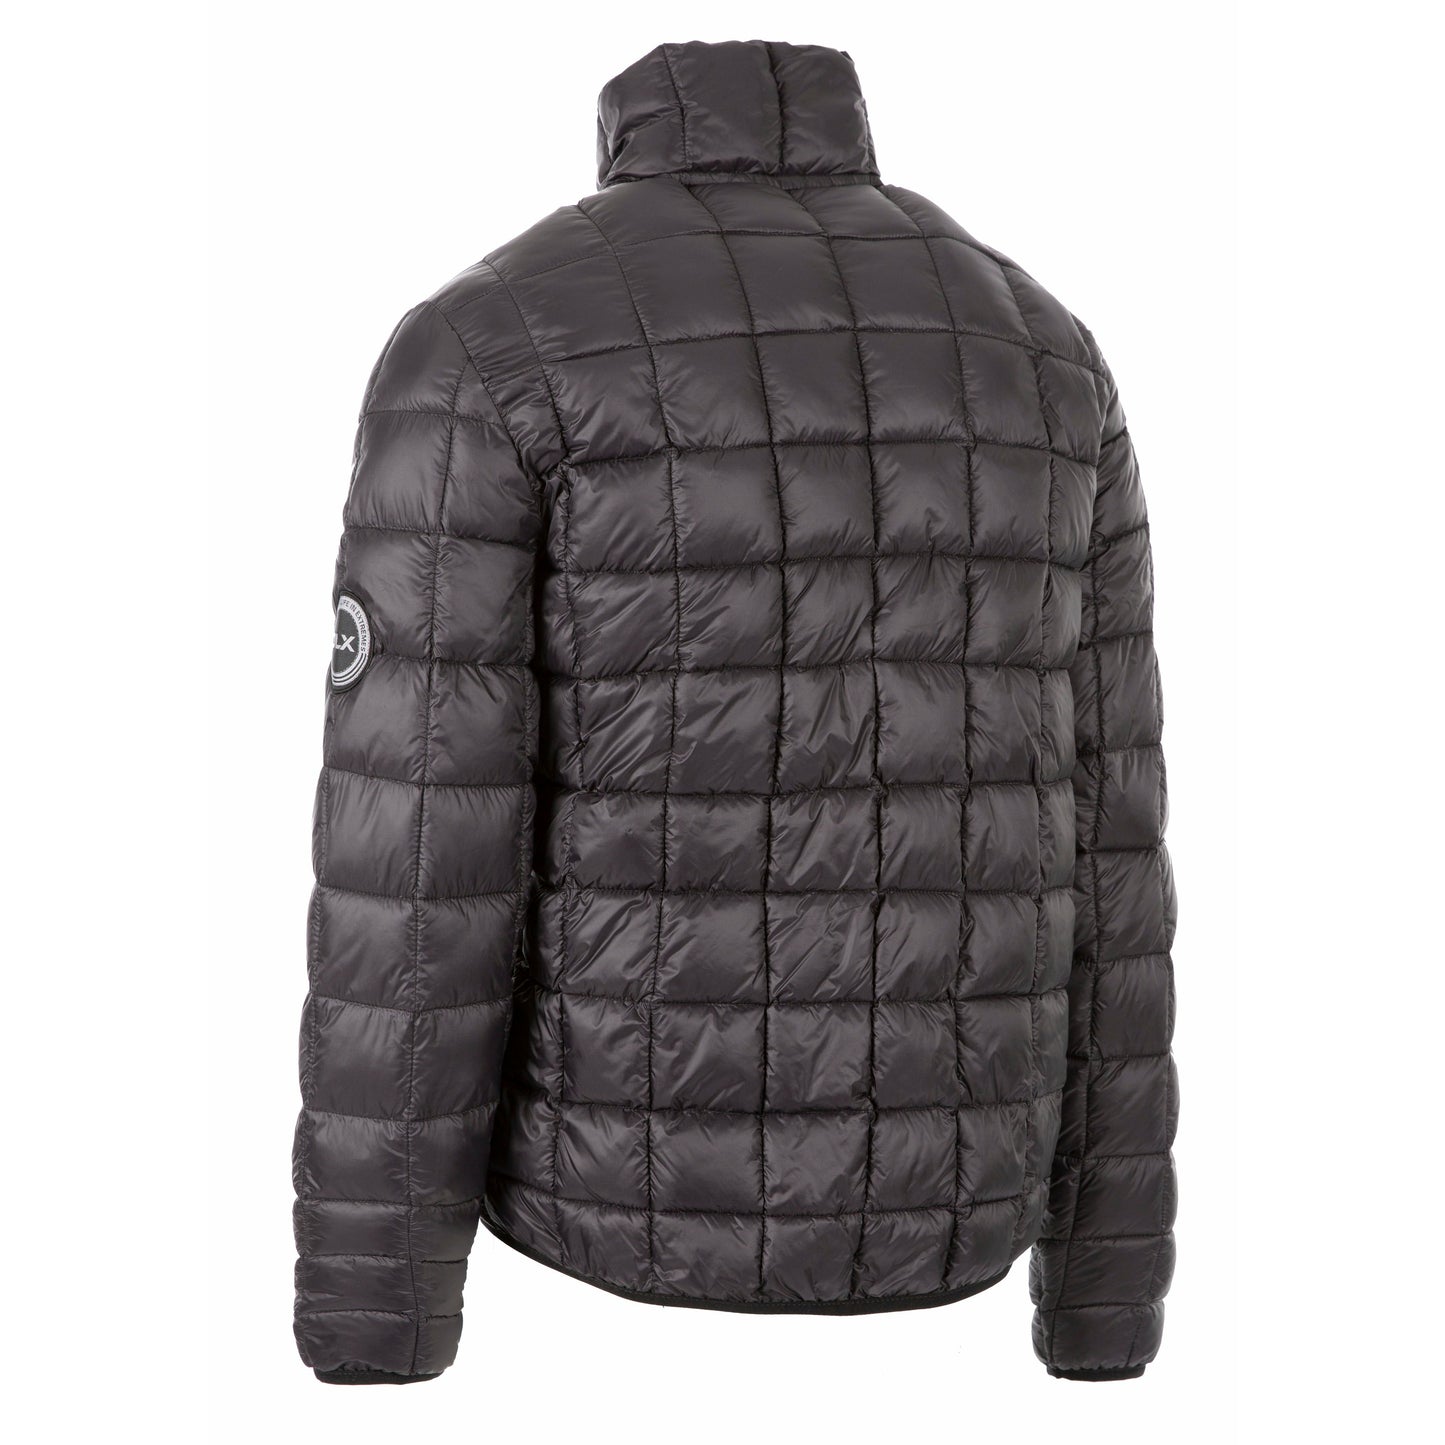 Asher Men's Dlx Eco Range Padded Jacket in Black